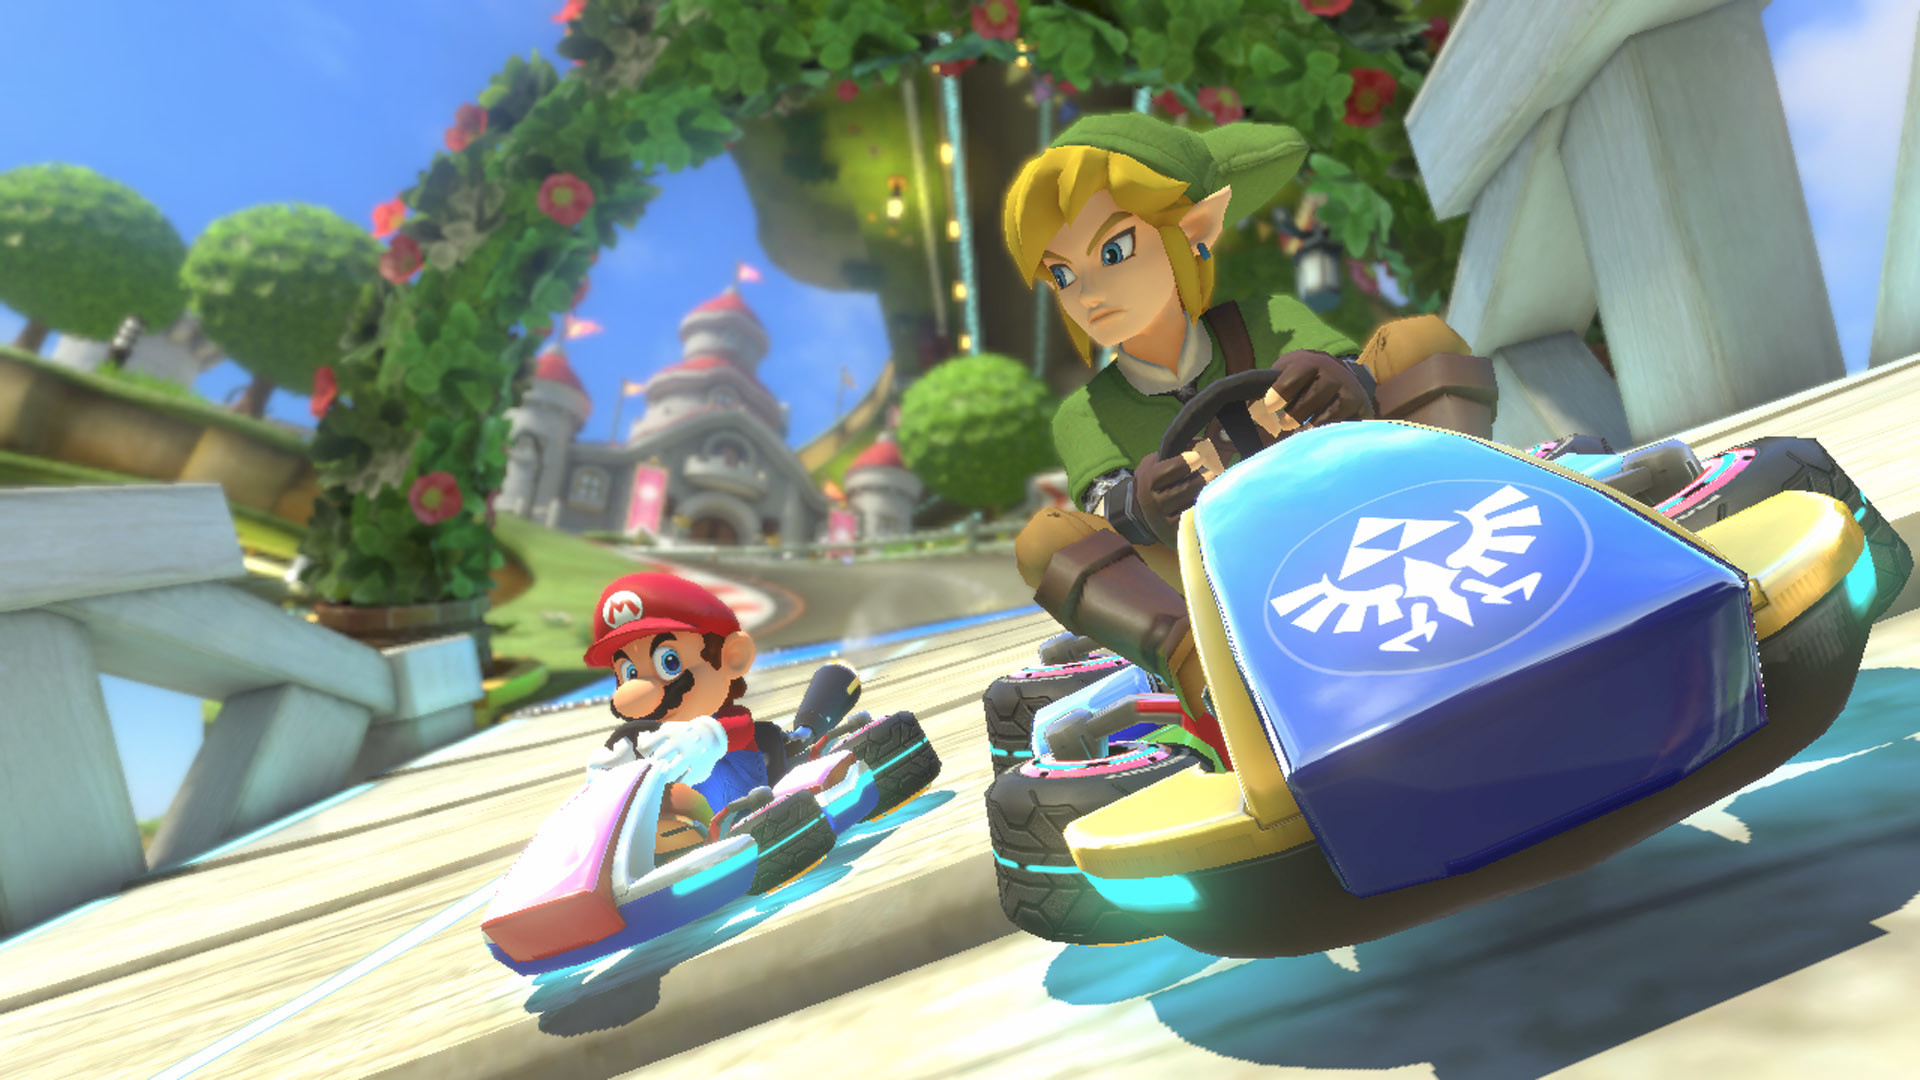 1920x1080 Mario Kart 8 DLC Announced, Features Zelda and Animal Crossing